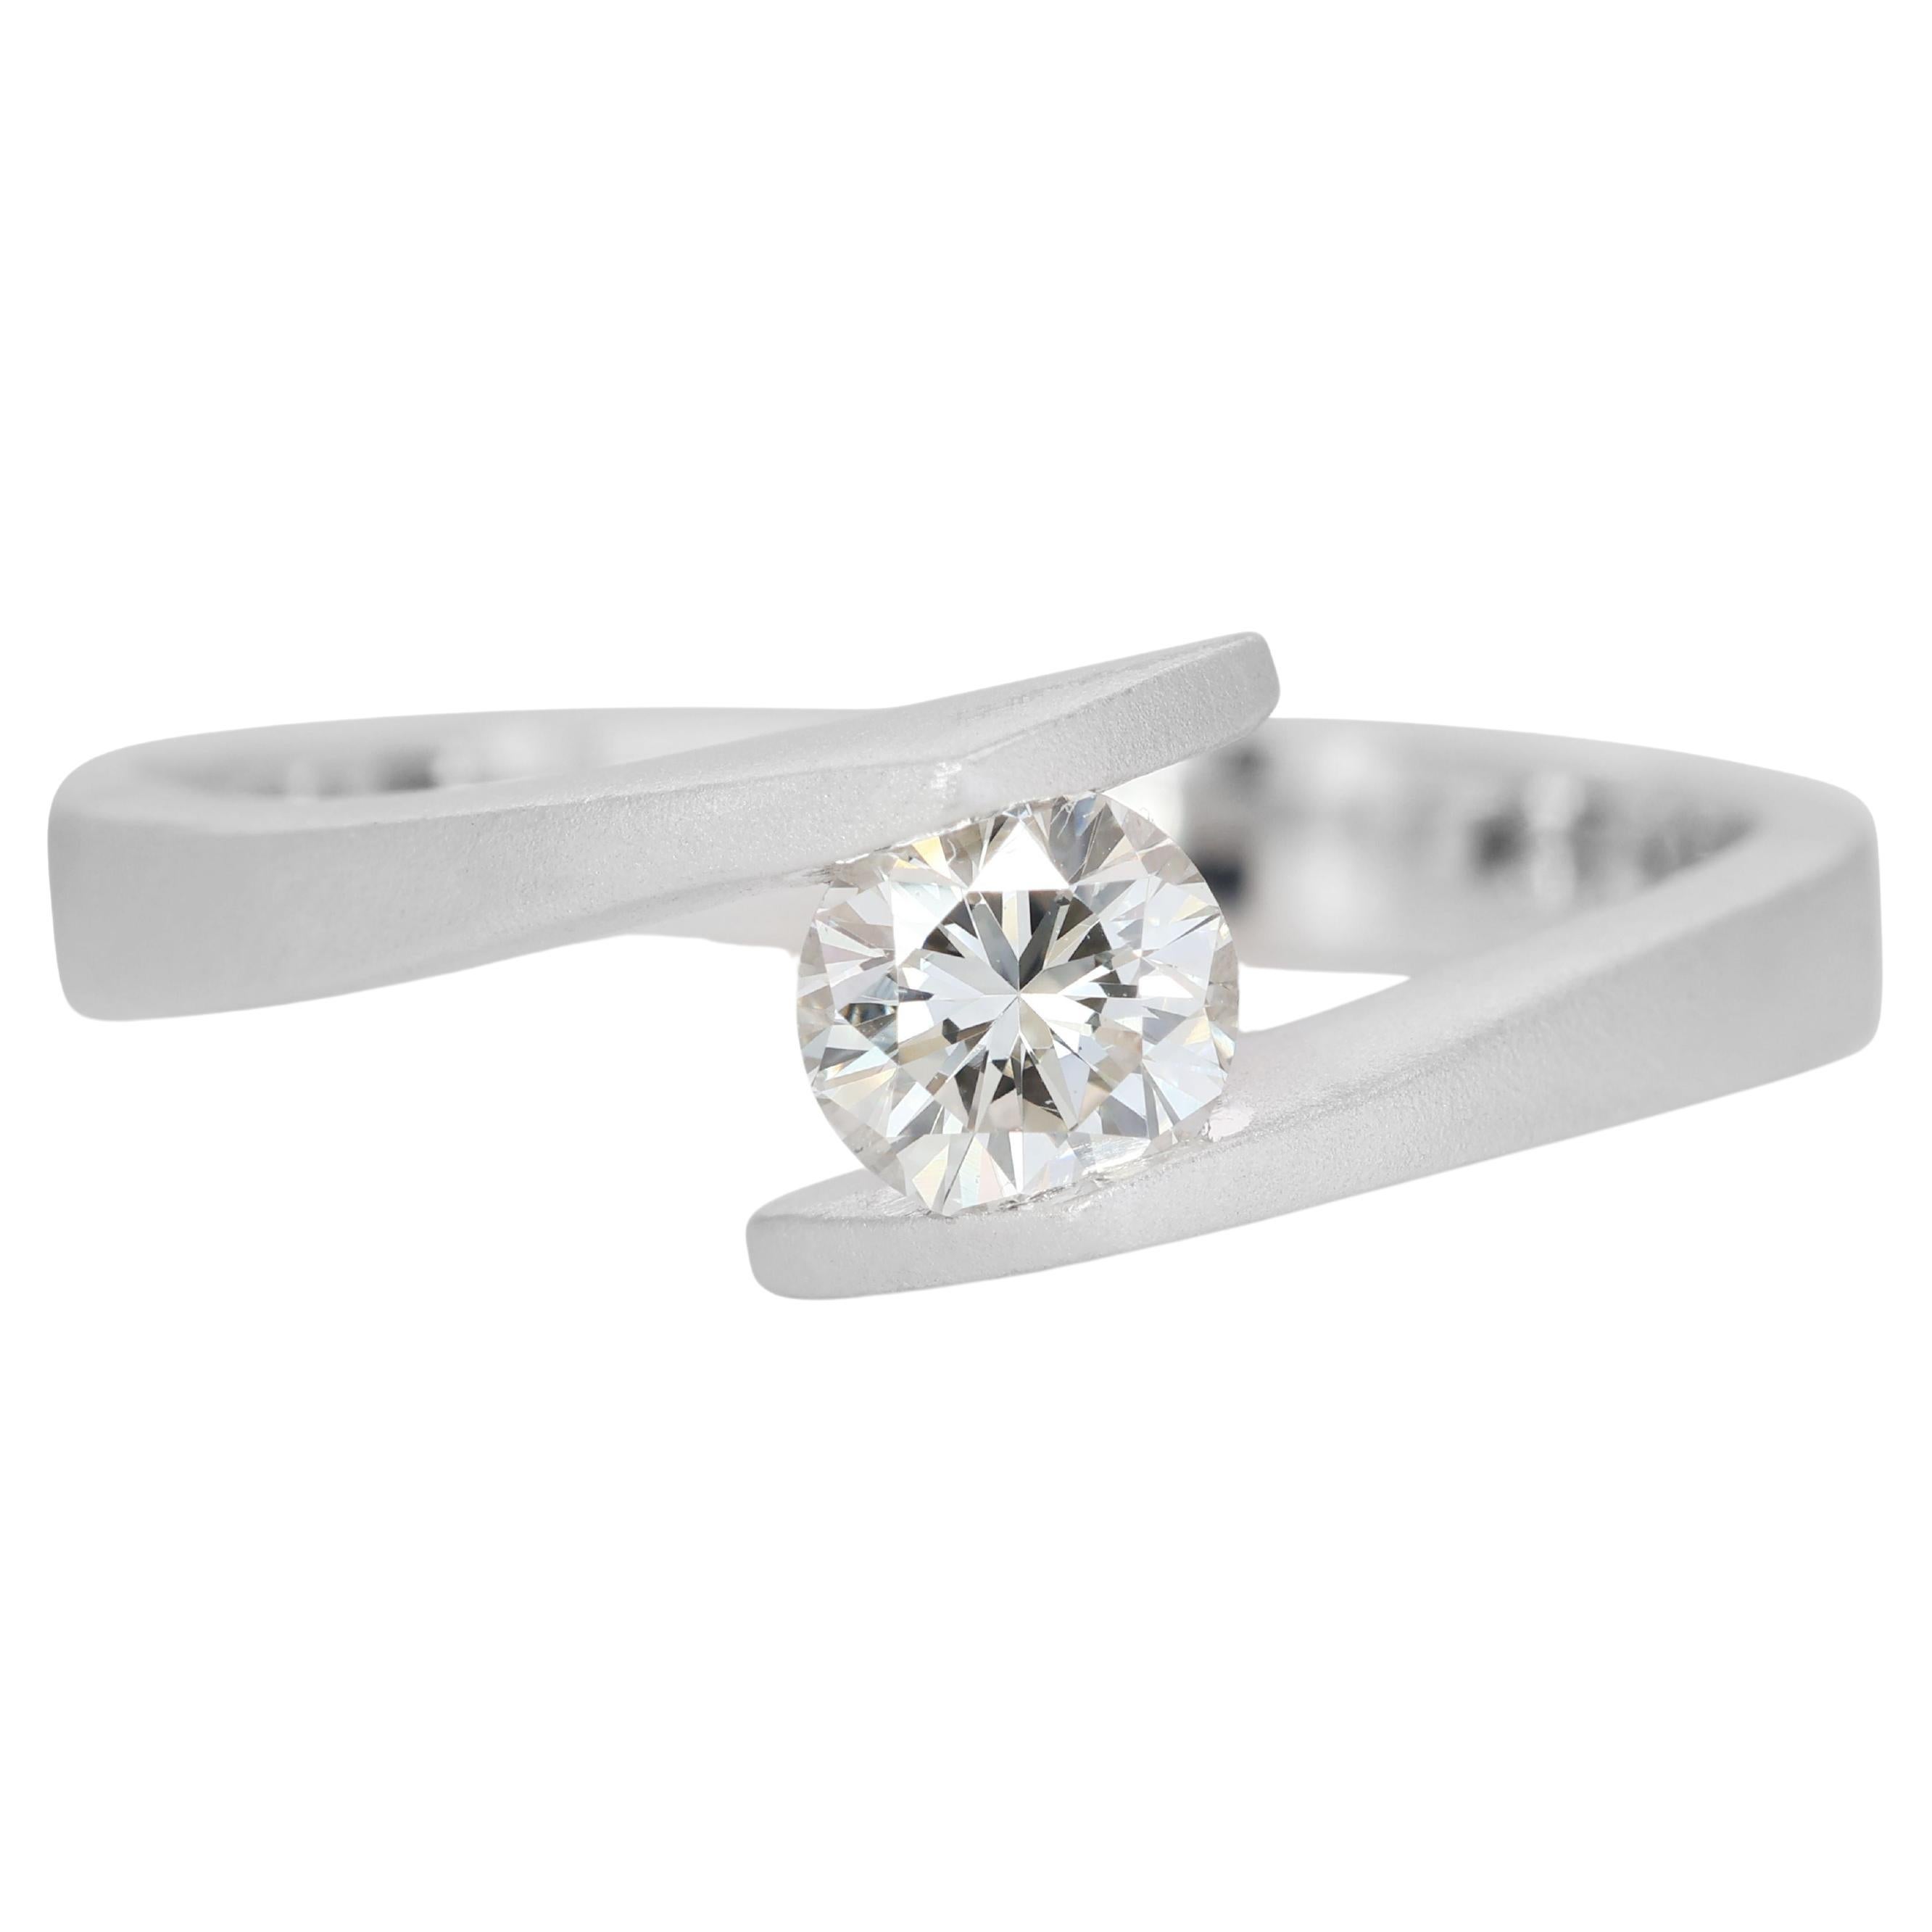 Elegant 18K White Gold Diamond Ring with 0.40 ct Natural Diamonds